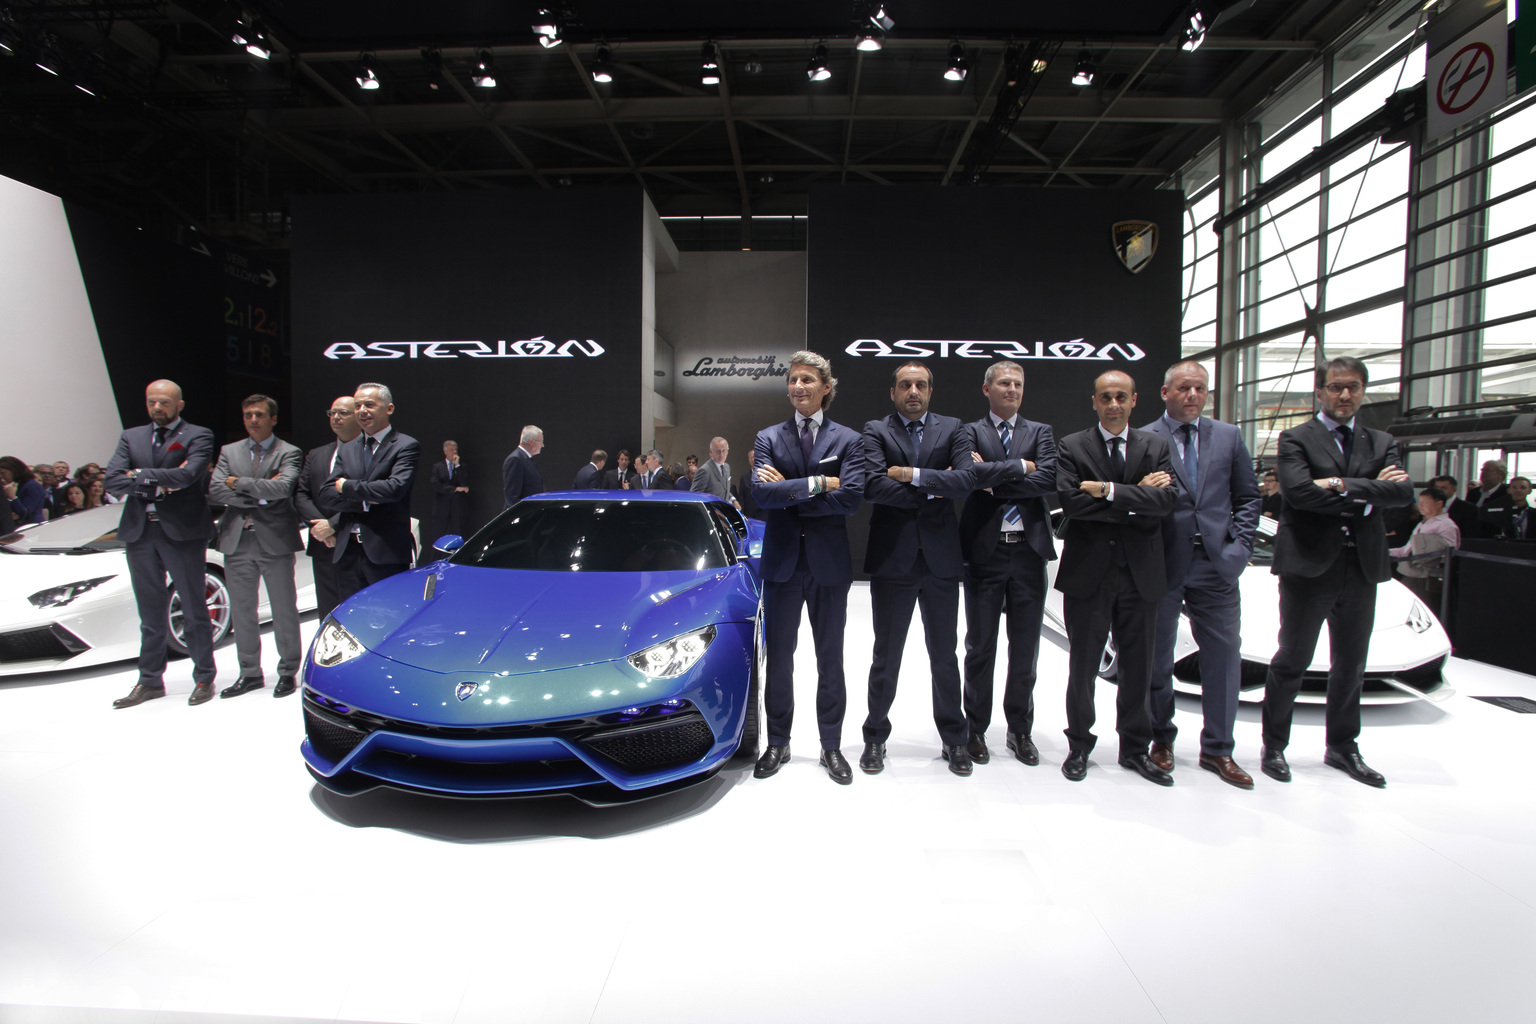 2014 Lamborghini Asterion LPI 910-4 Gallery